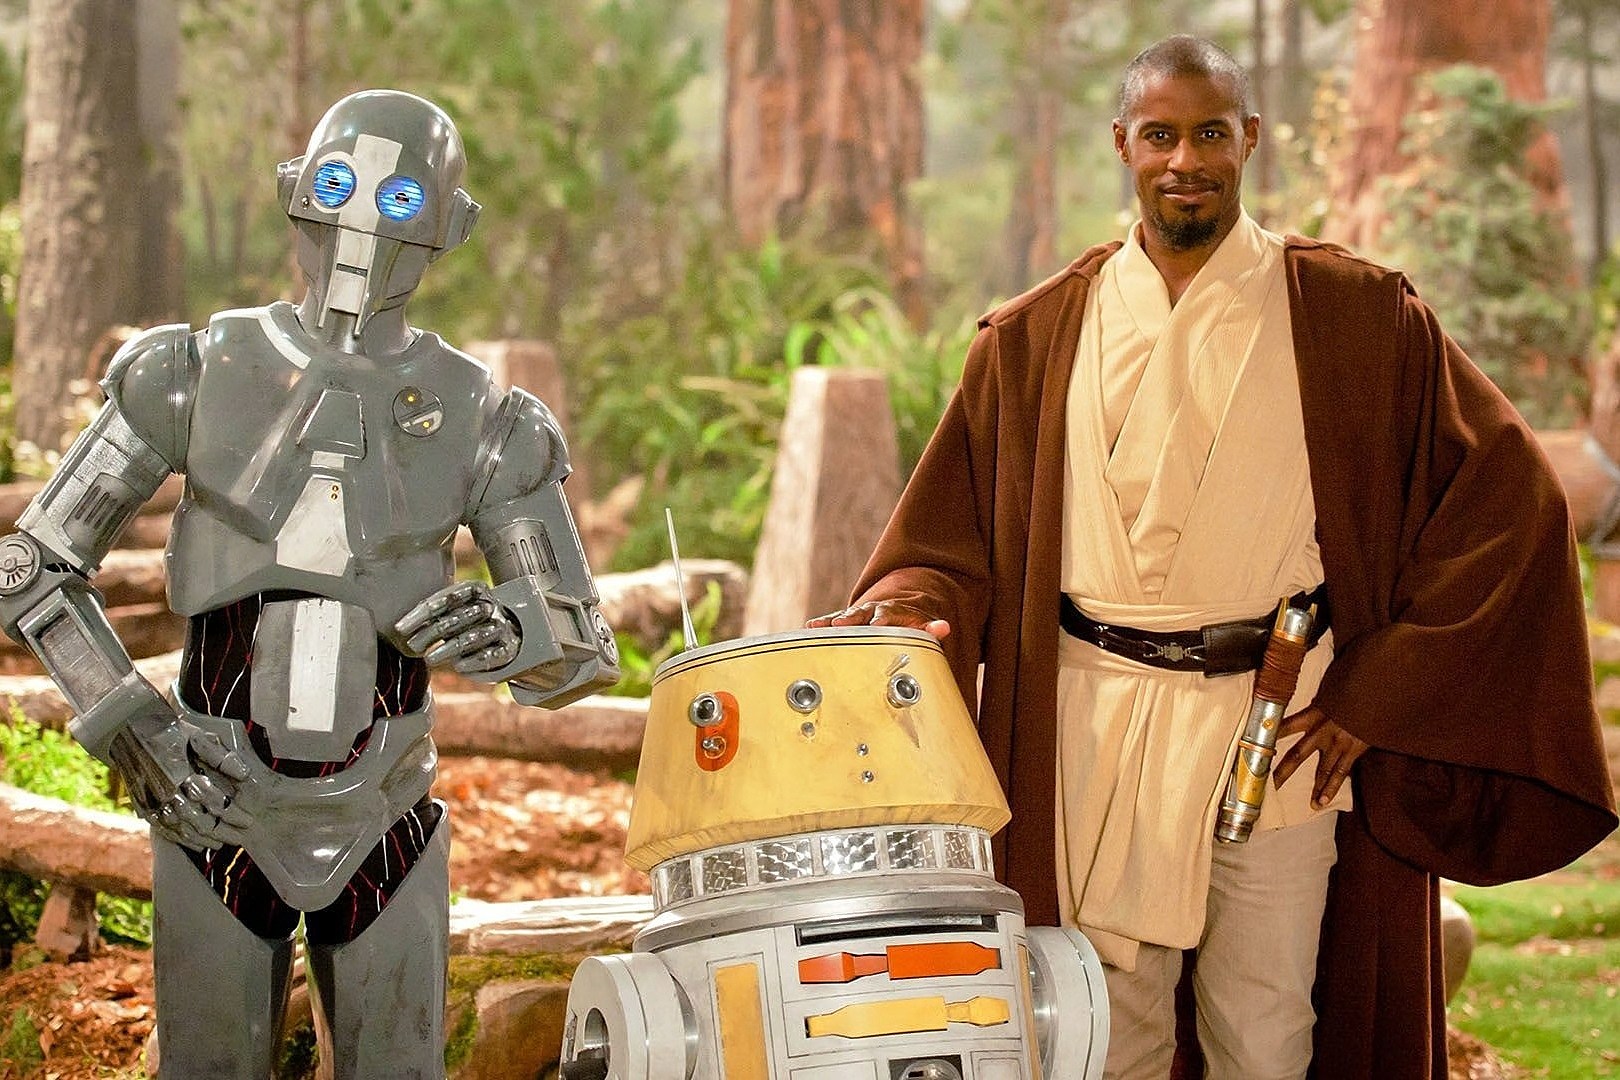 Jar Jar Binks Actor Ahmed Best Returns to Star Wars in The Mandalorian